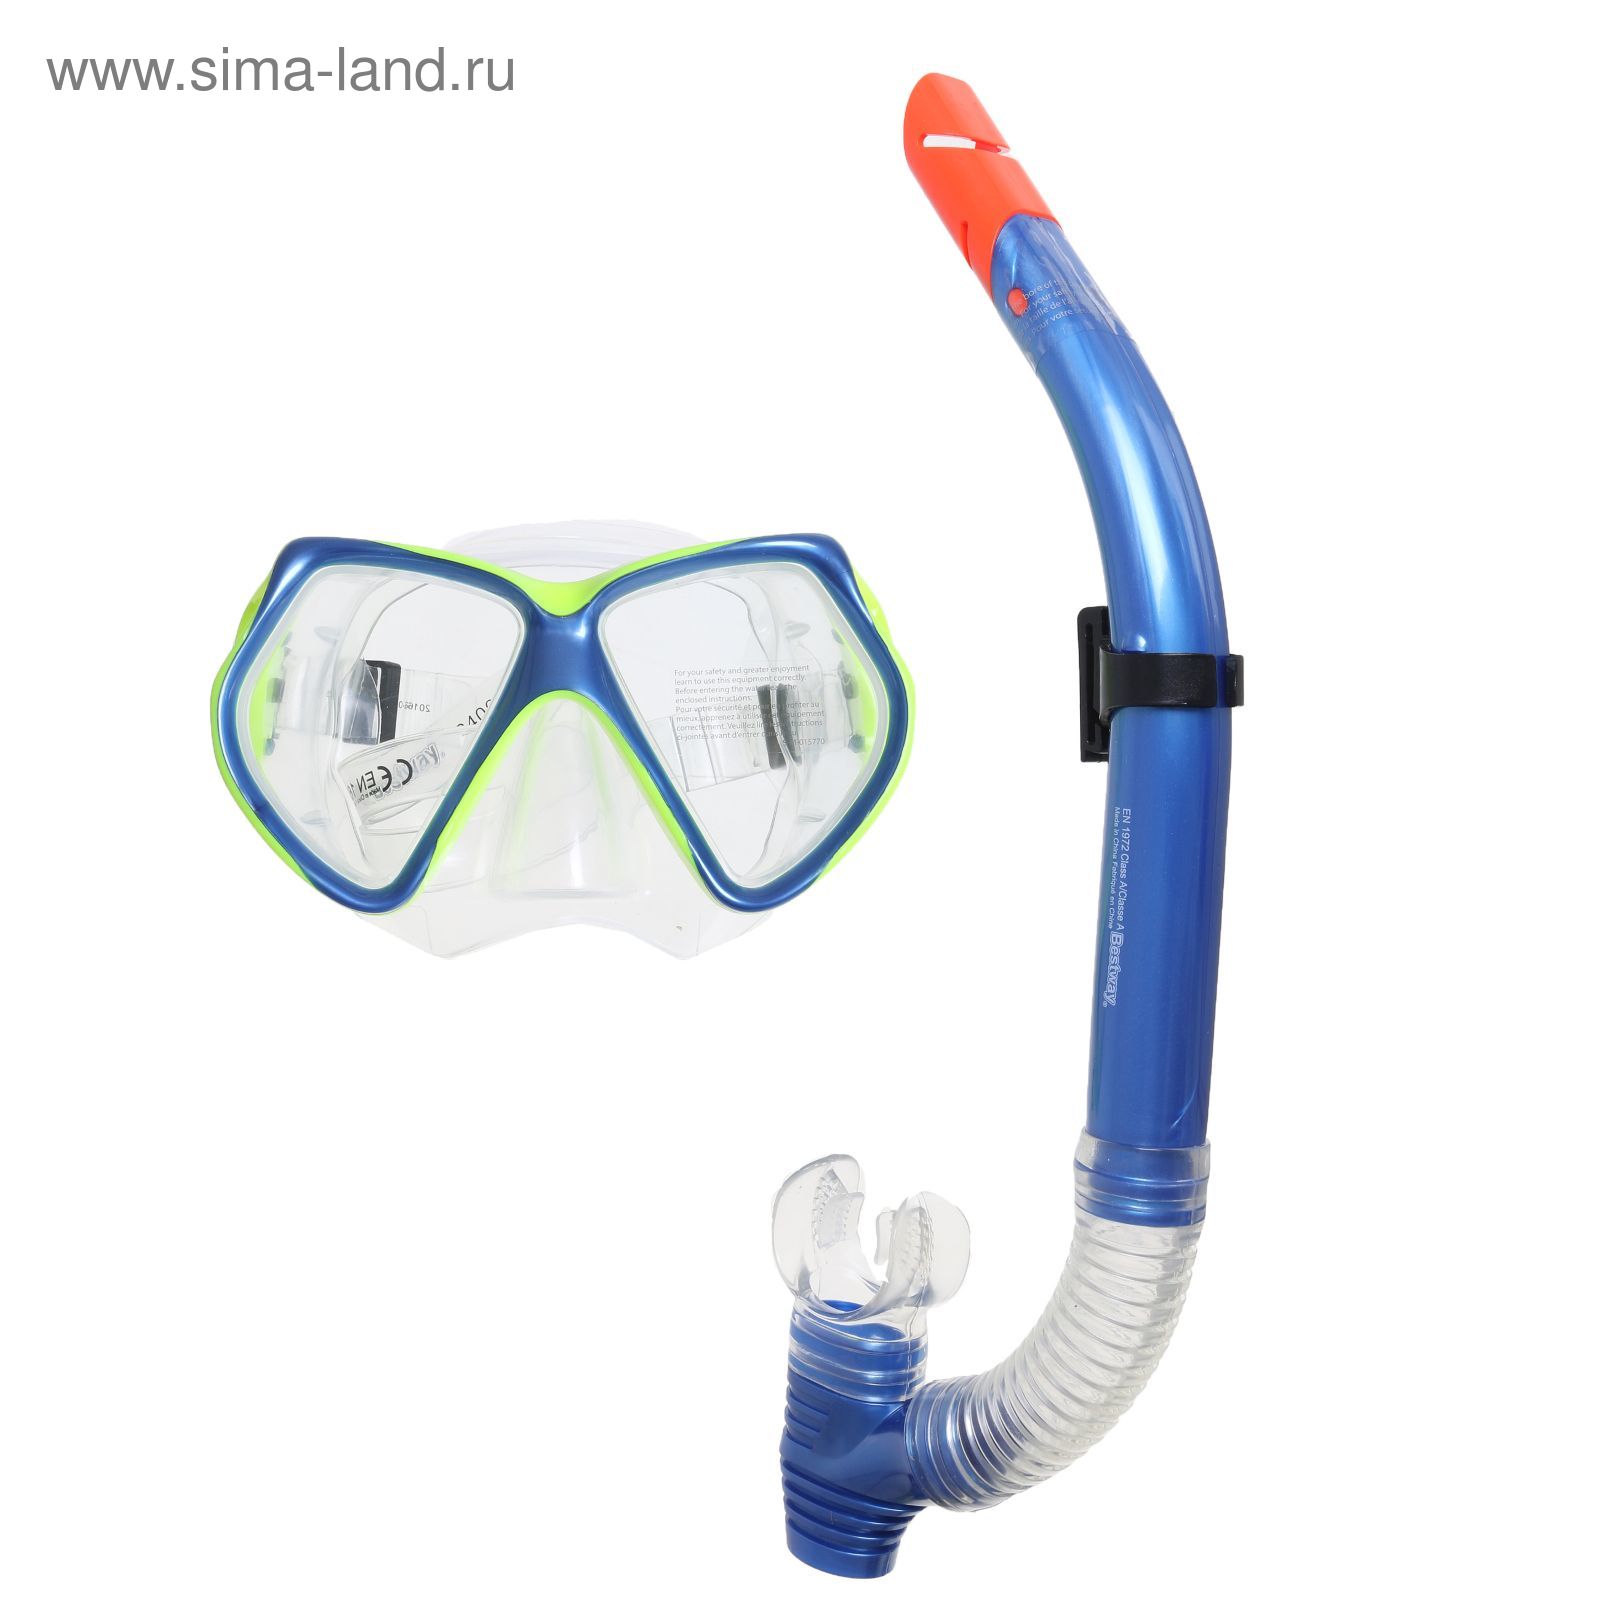 Набор для плавания Ocean, 2 предмета: маска, трубка, от 14 лет, цвет МИКС Bestway